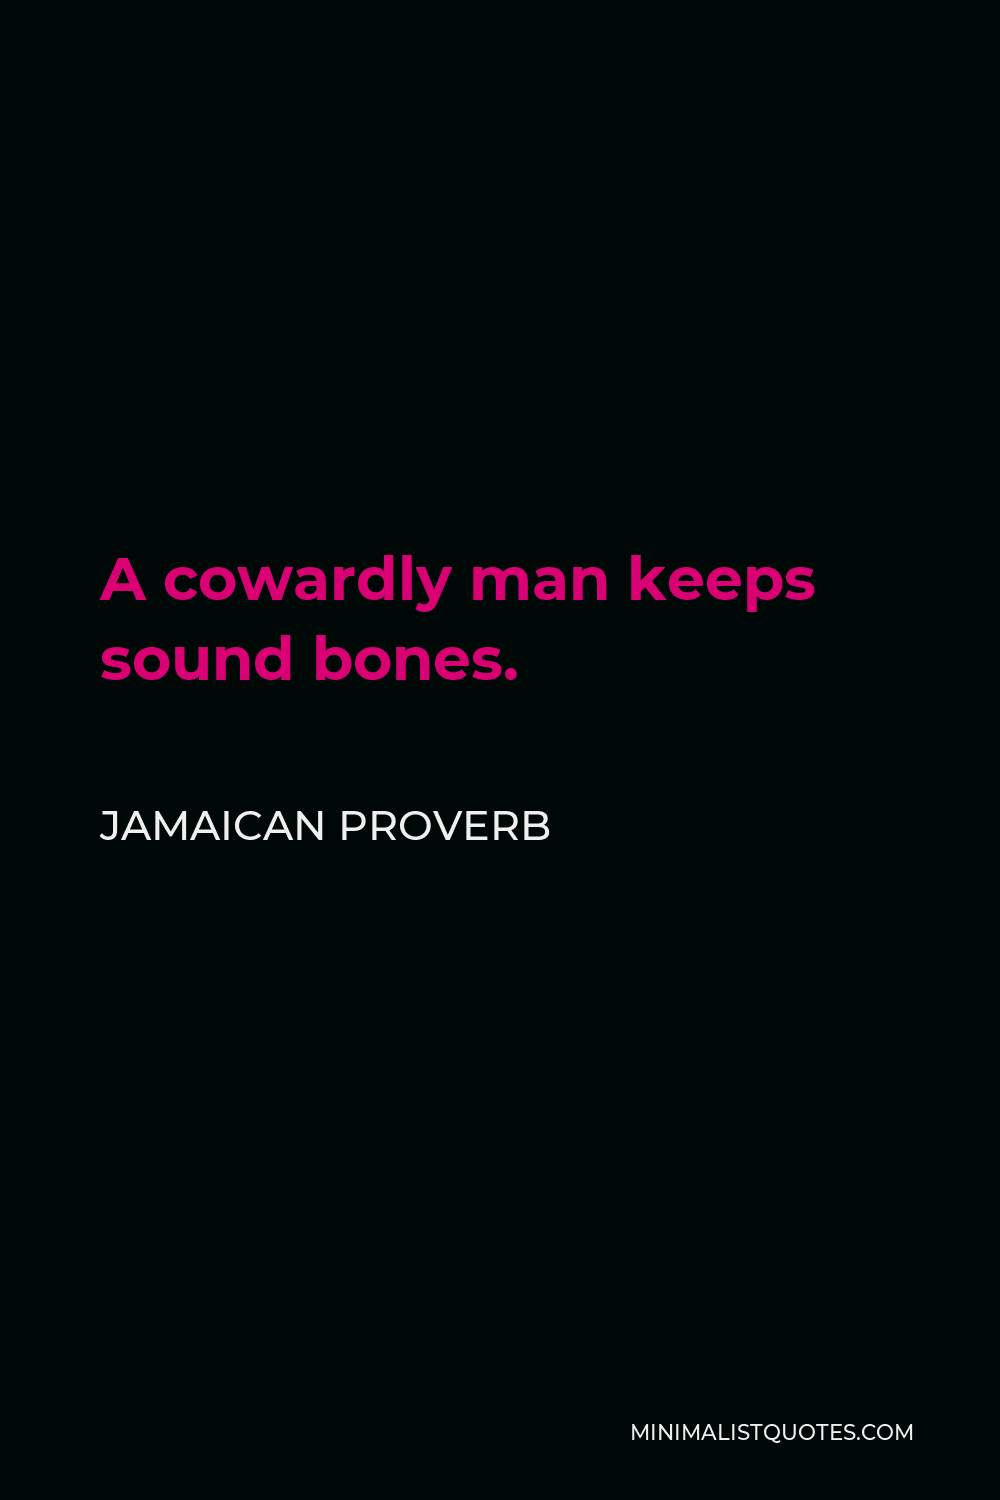 Jamaican Proverb Quote - A cowardly man keeps sound bones.